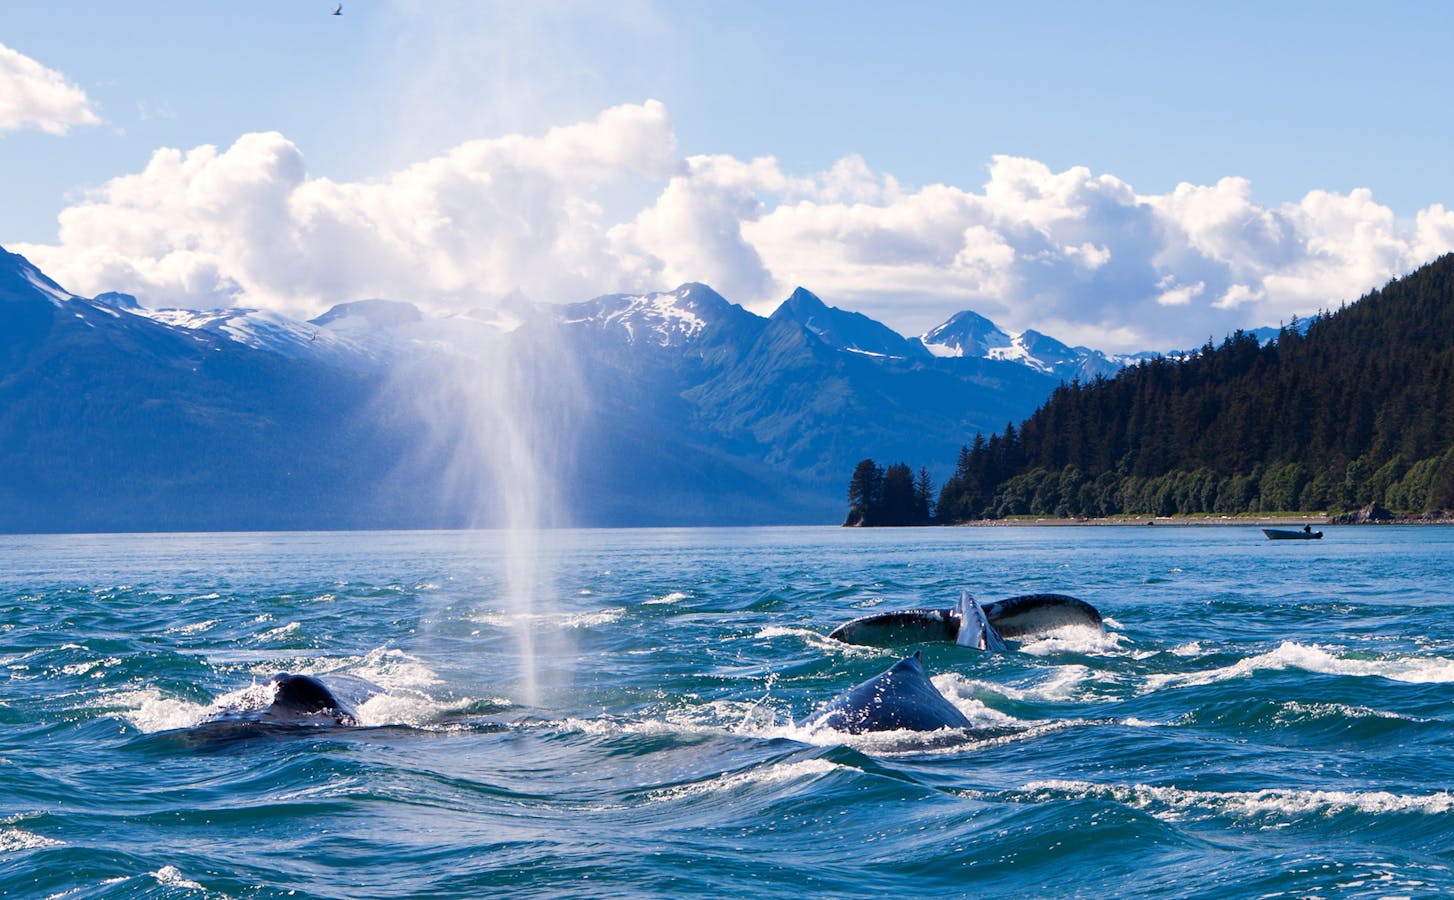 Humpback whales in Alaska